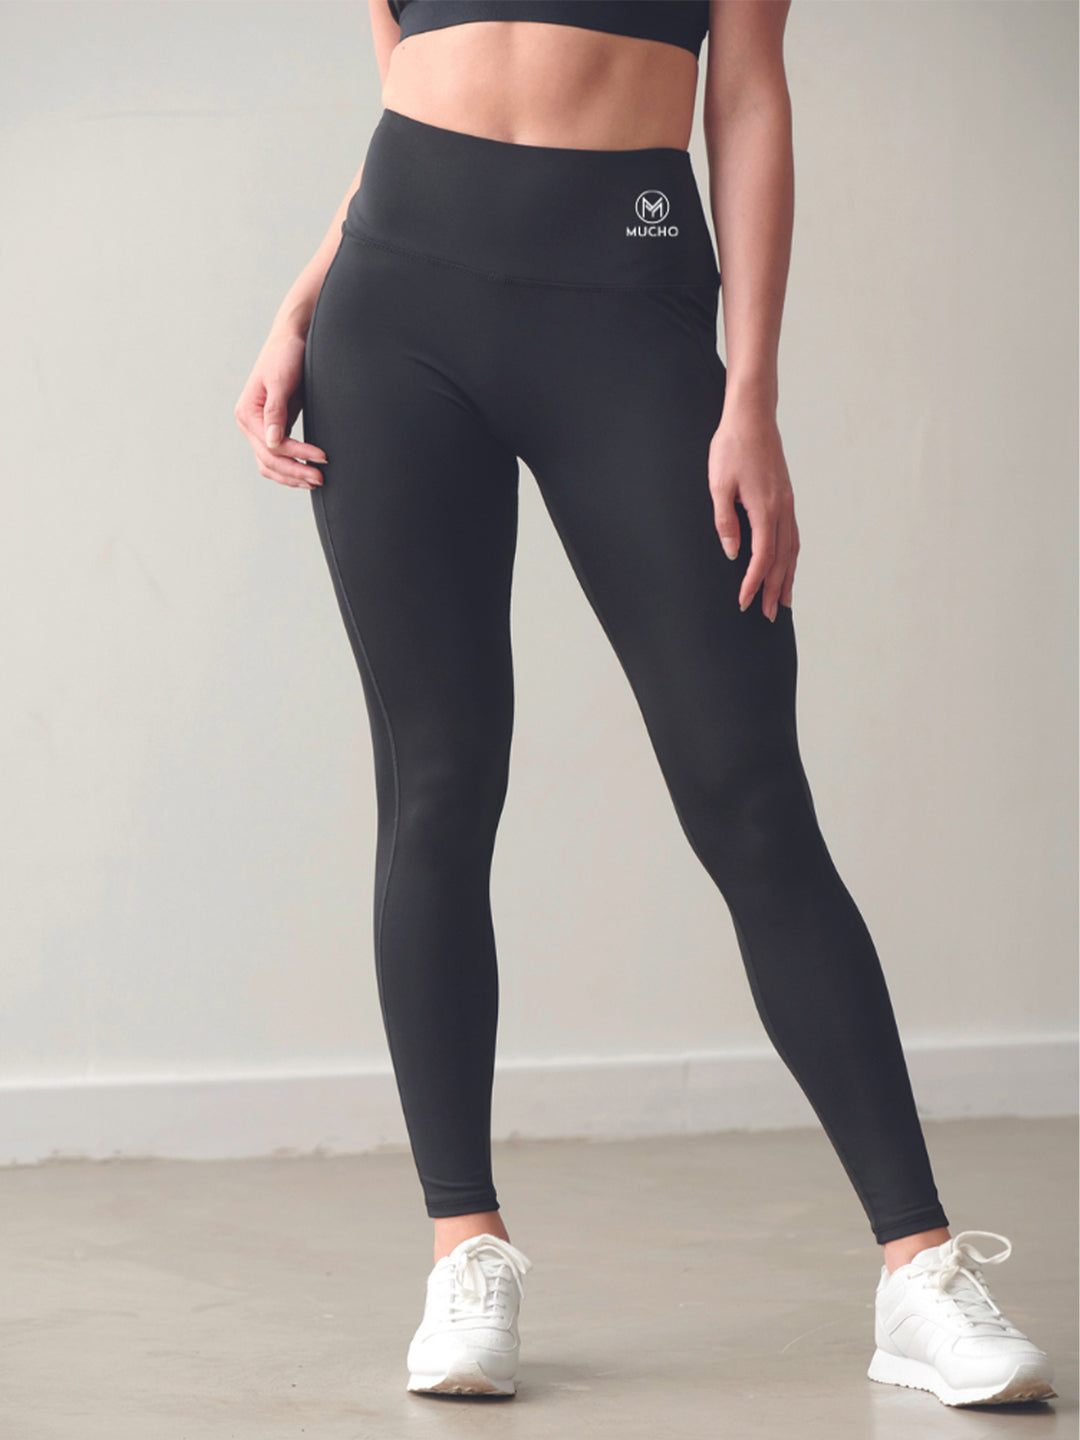 Multisport leggings with pocket - M2 - Women